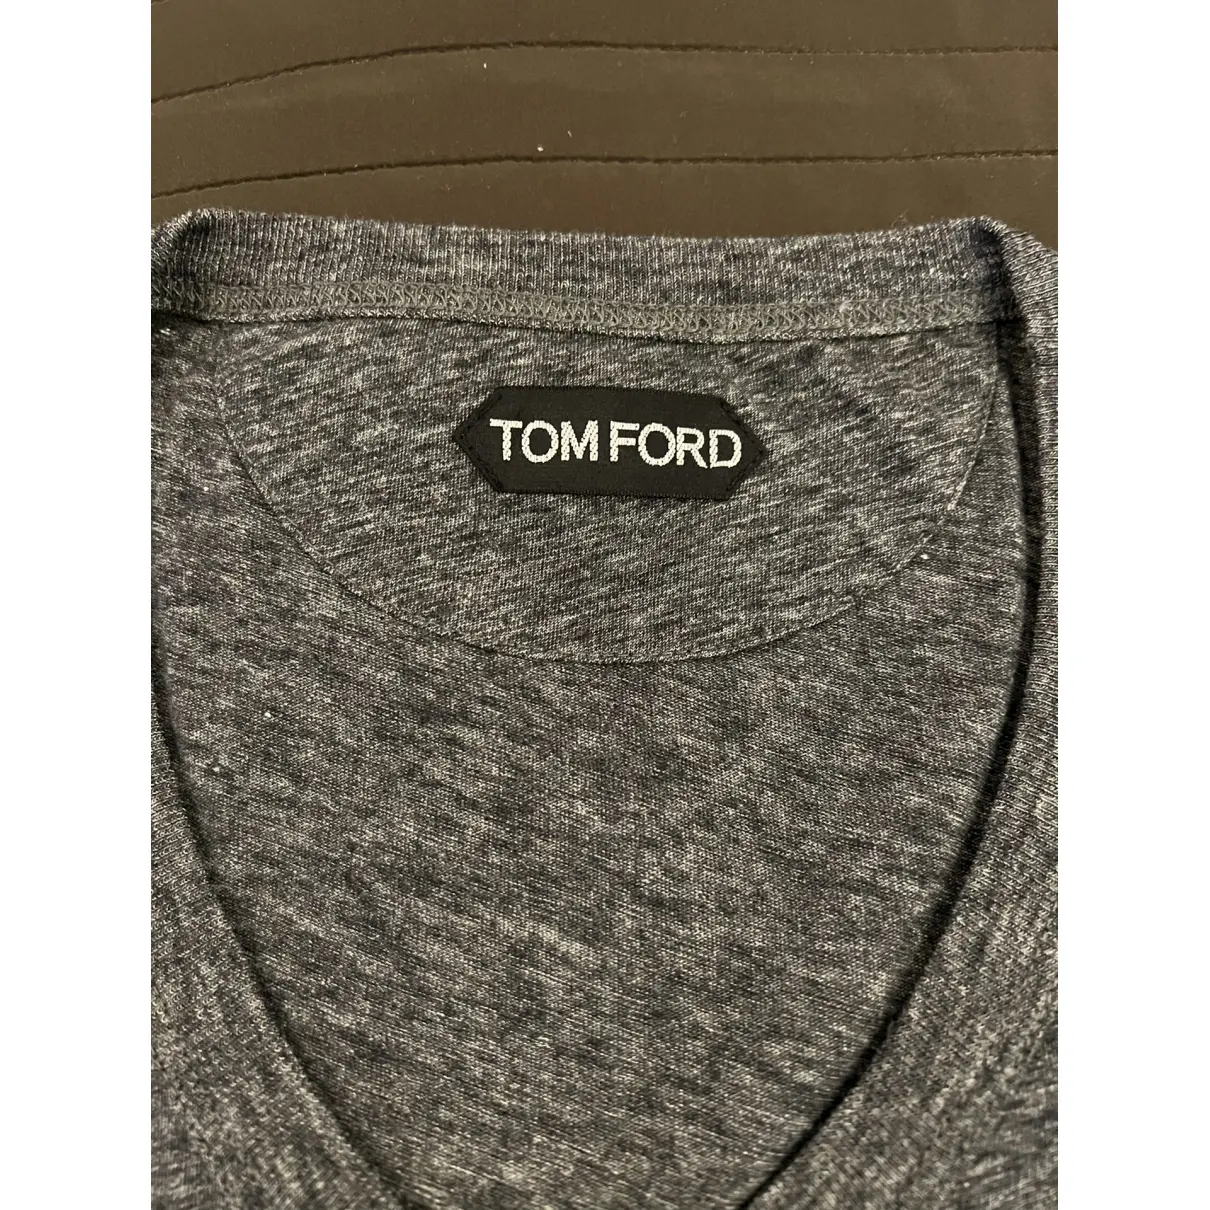 Buy Tom Ford T-shirt online